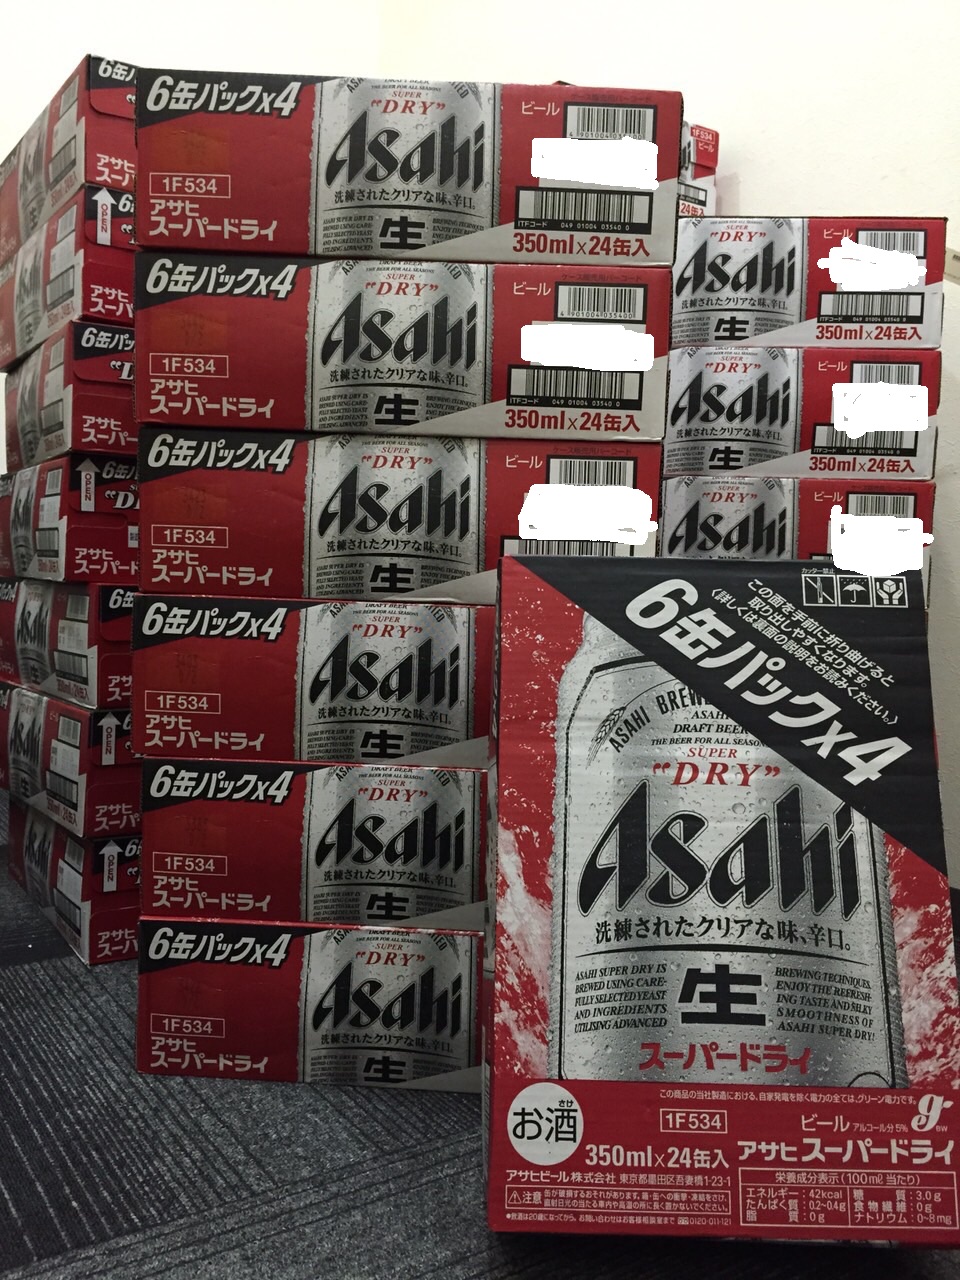 ASAHI スーパードライ 350ml×24缶入り 40ケース | 福岡の買取・質屋 